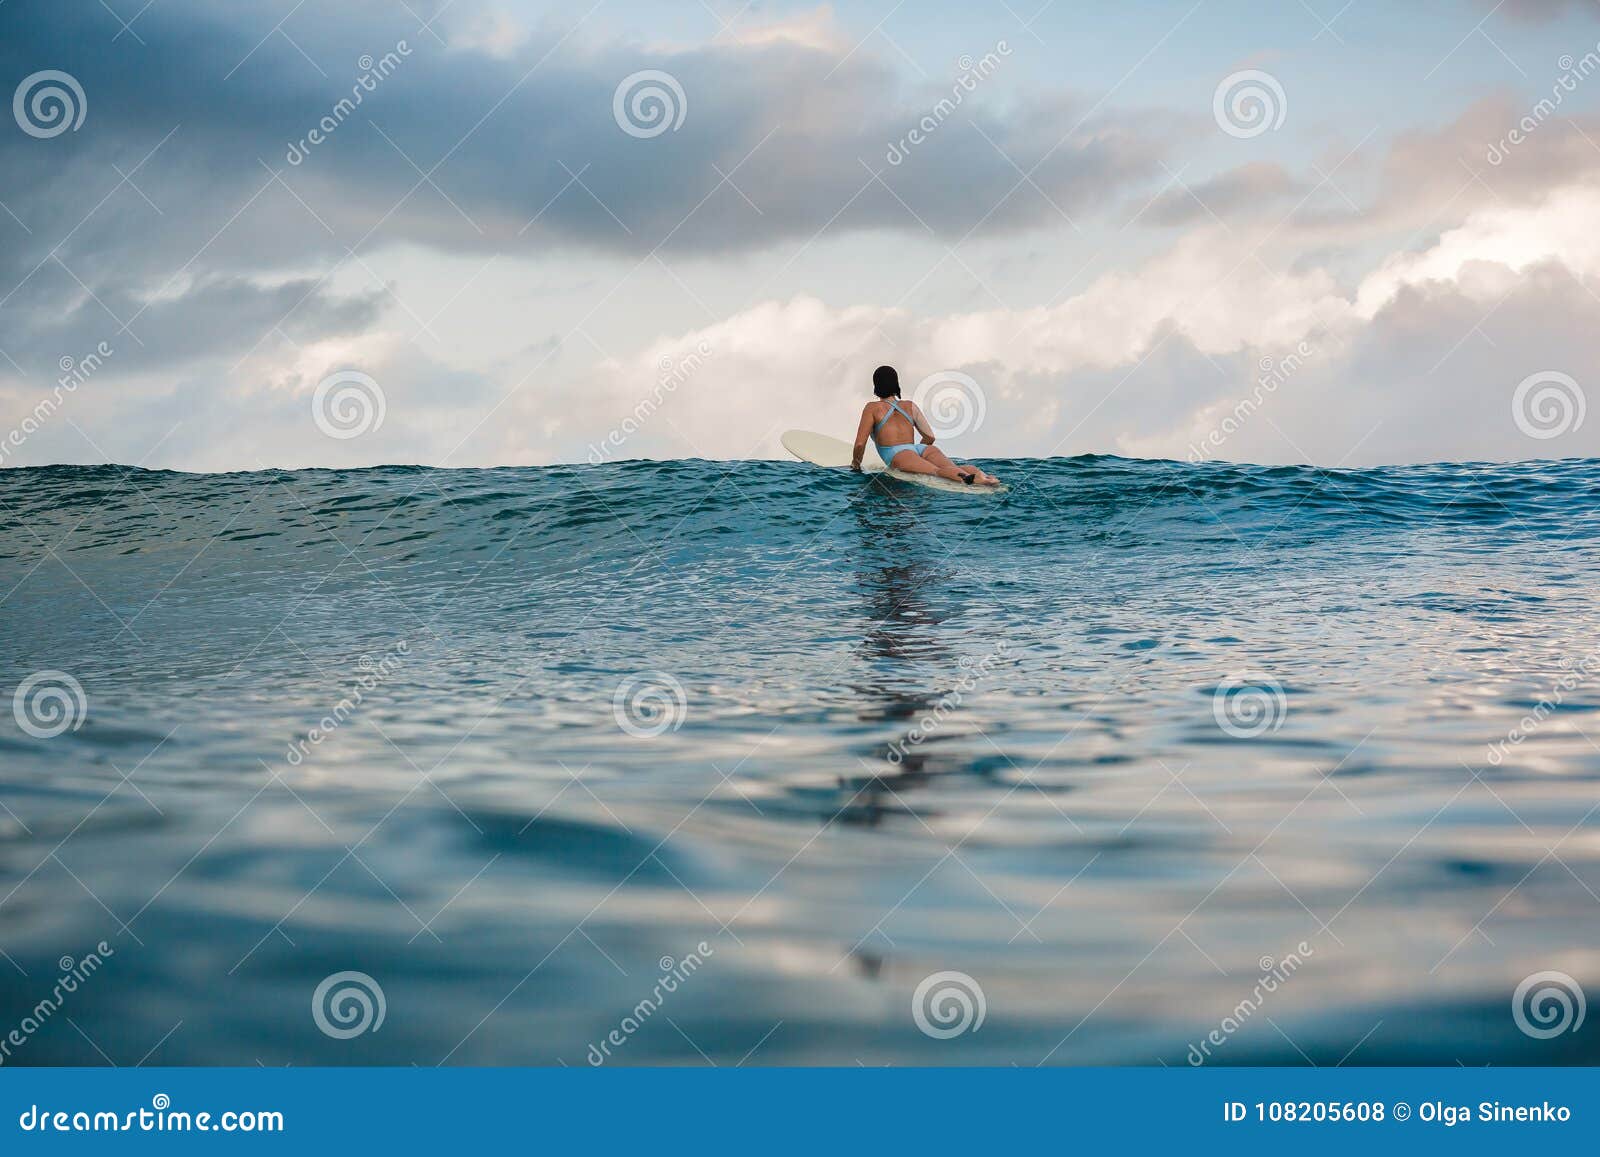 Young Woman in Bright Bikini Surfing on a Board in Ocean Stock Photo ...